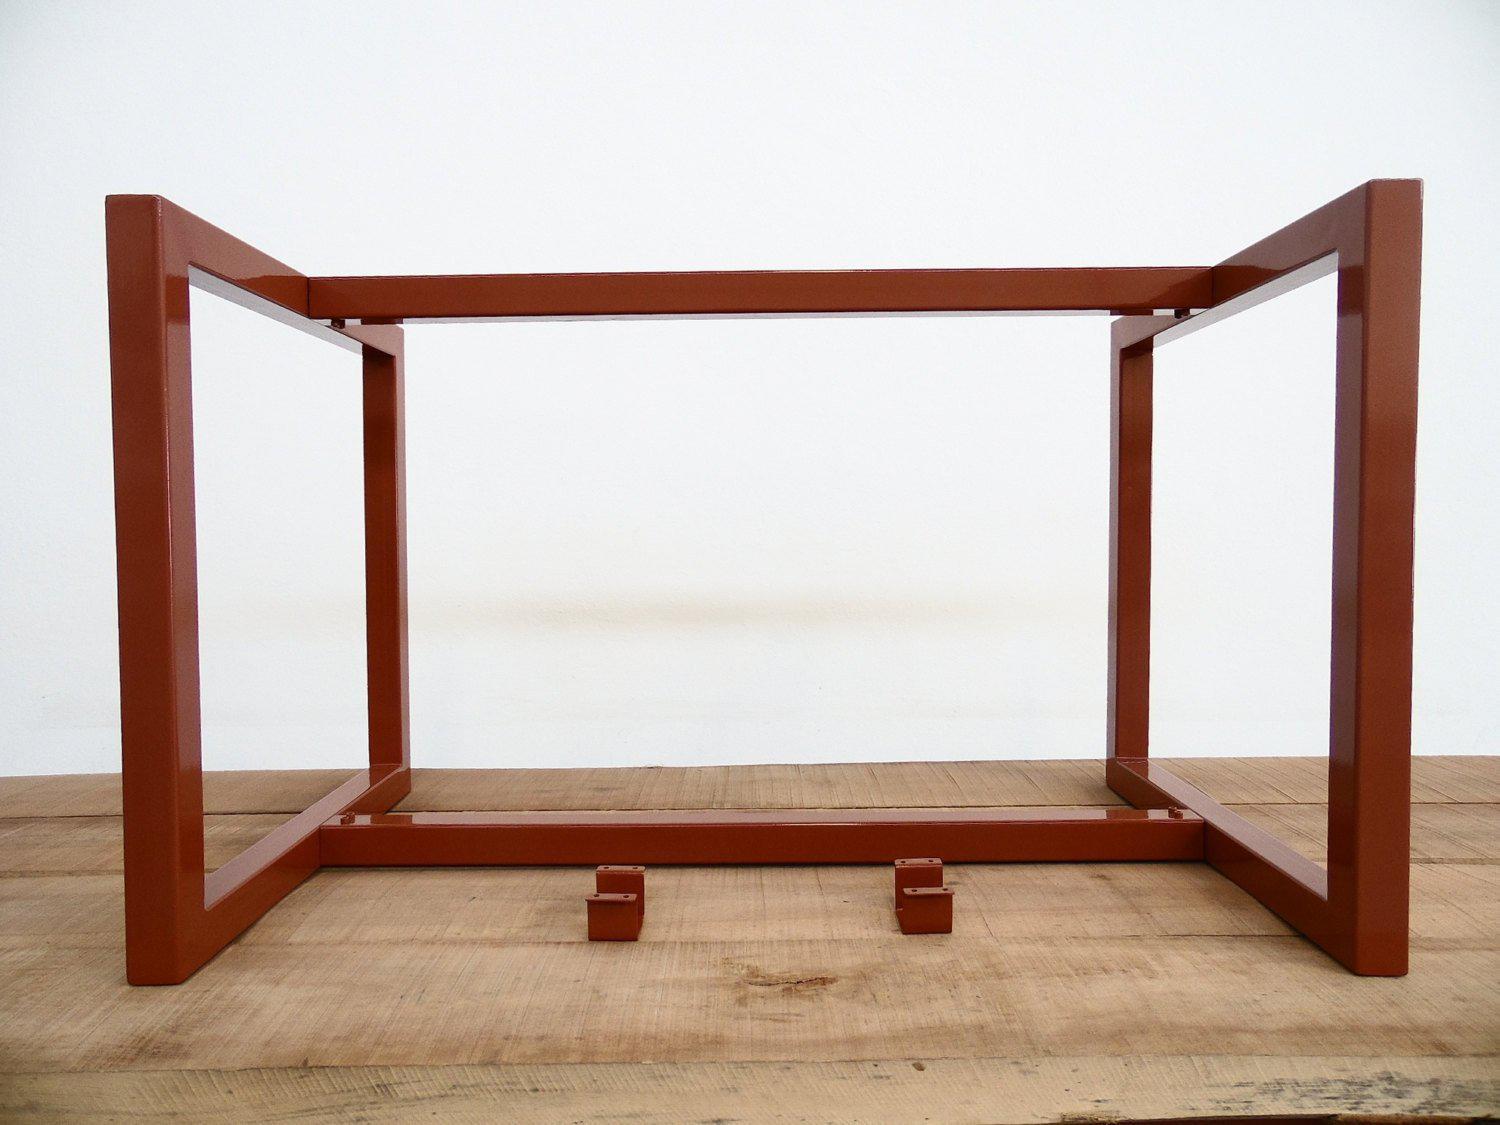 28" X 24 - Apart 42" Frame Long Table Base